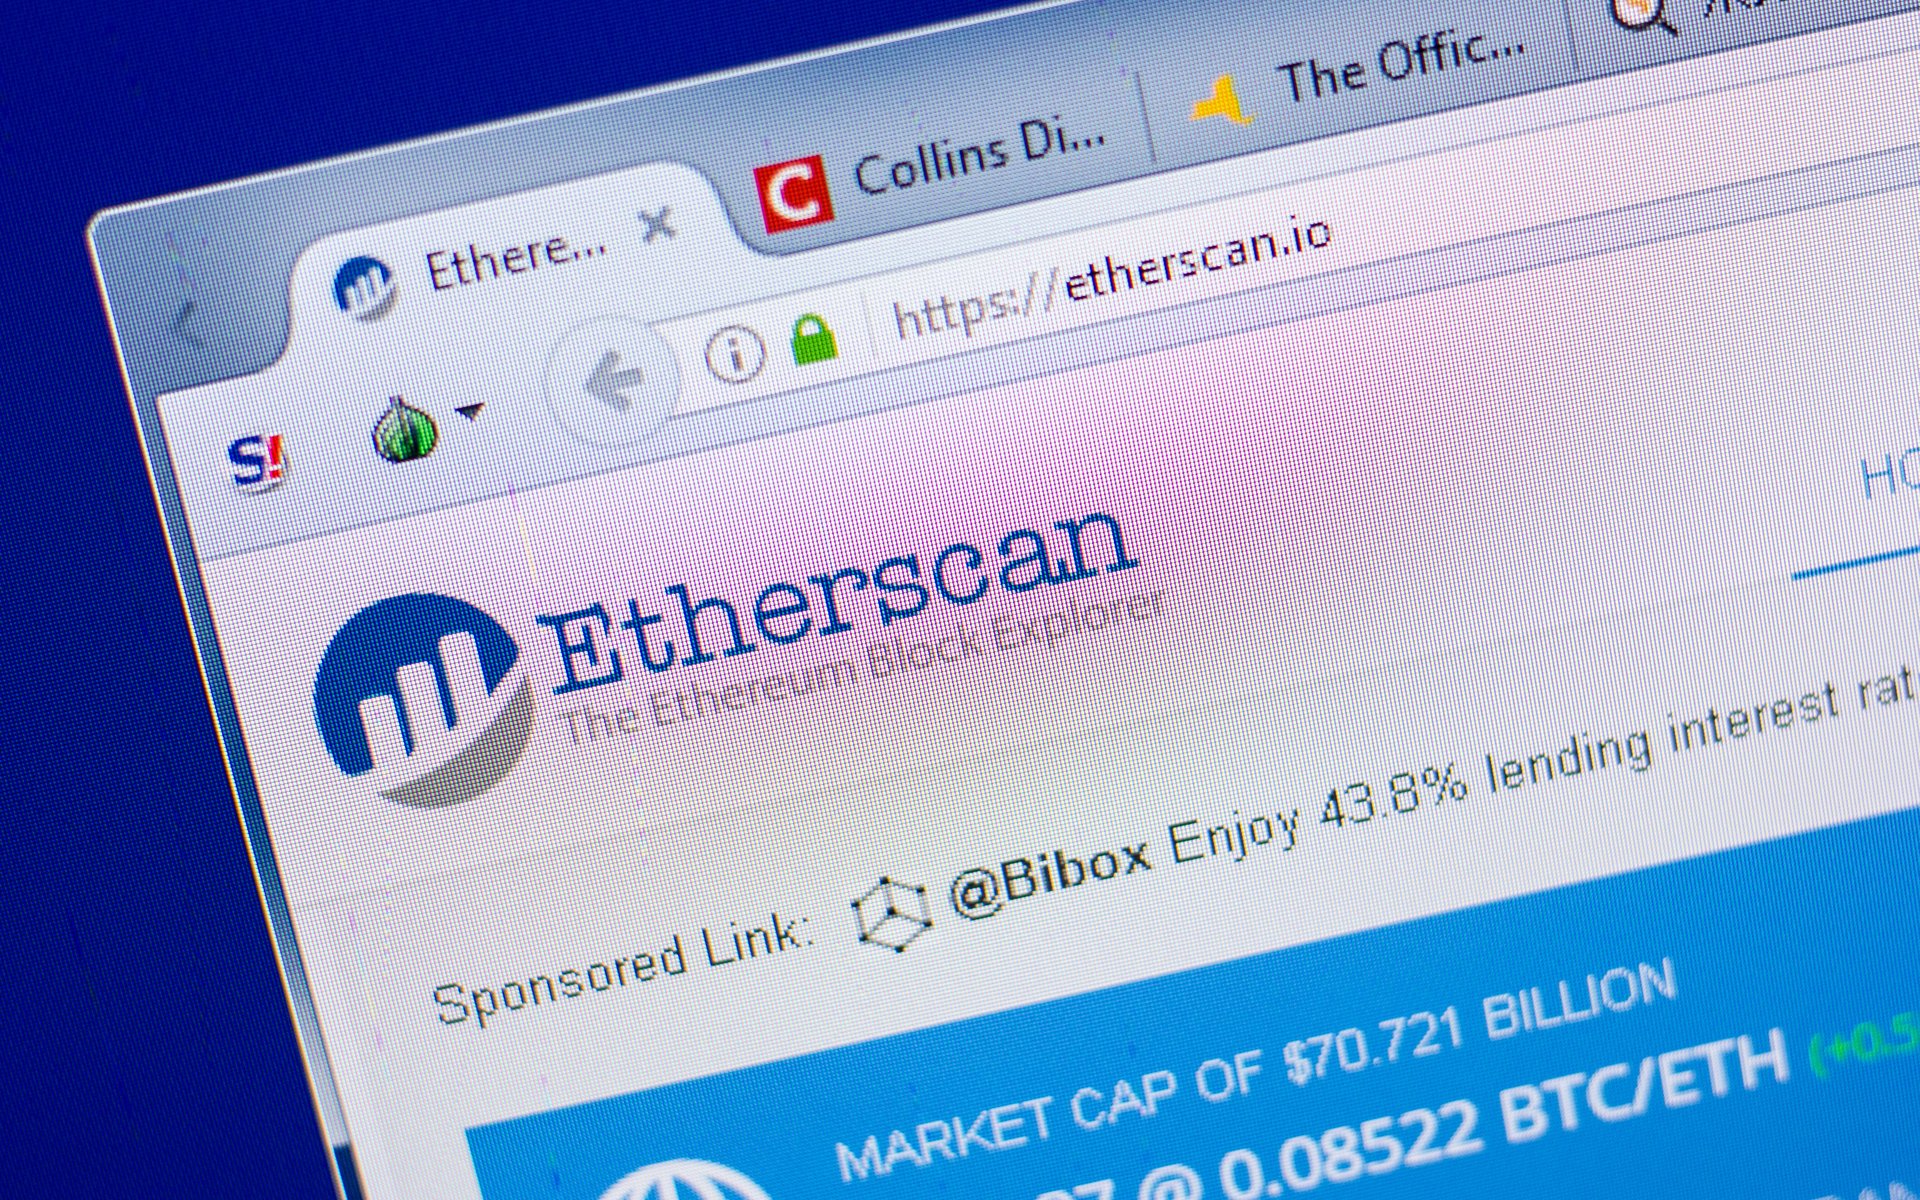 Etherscan APIs- Ethereum (ETH) API Provider